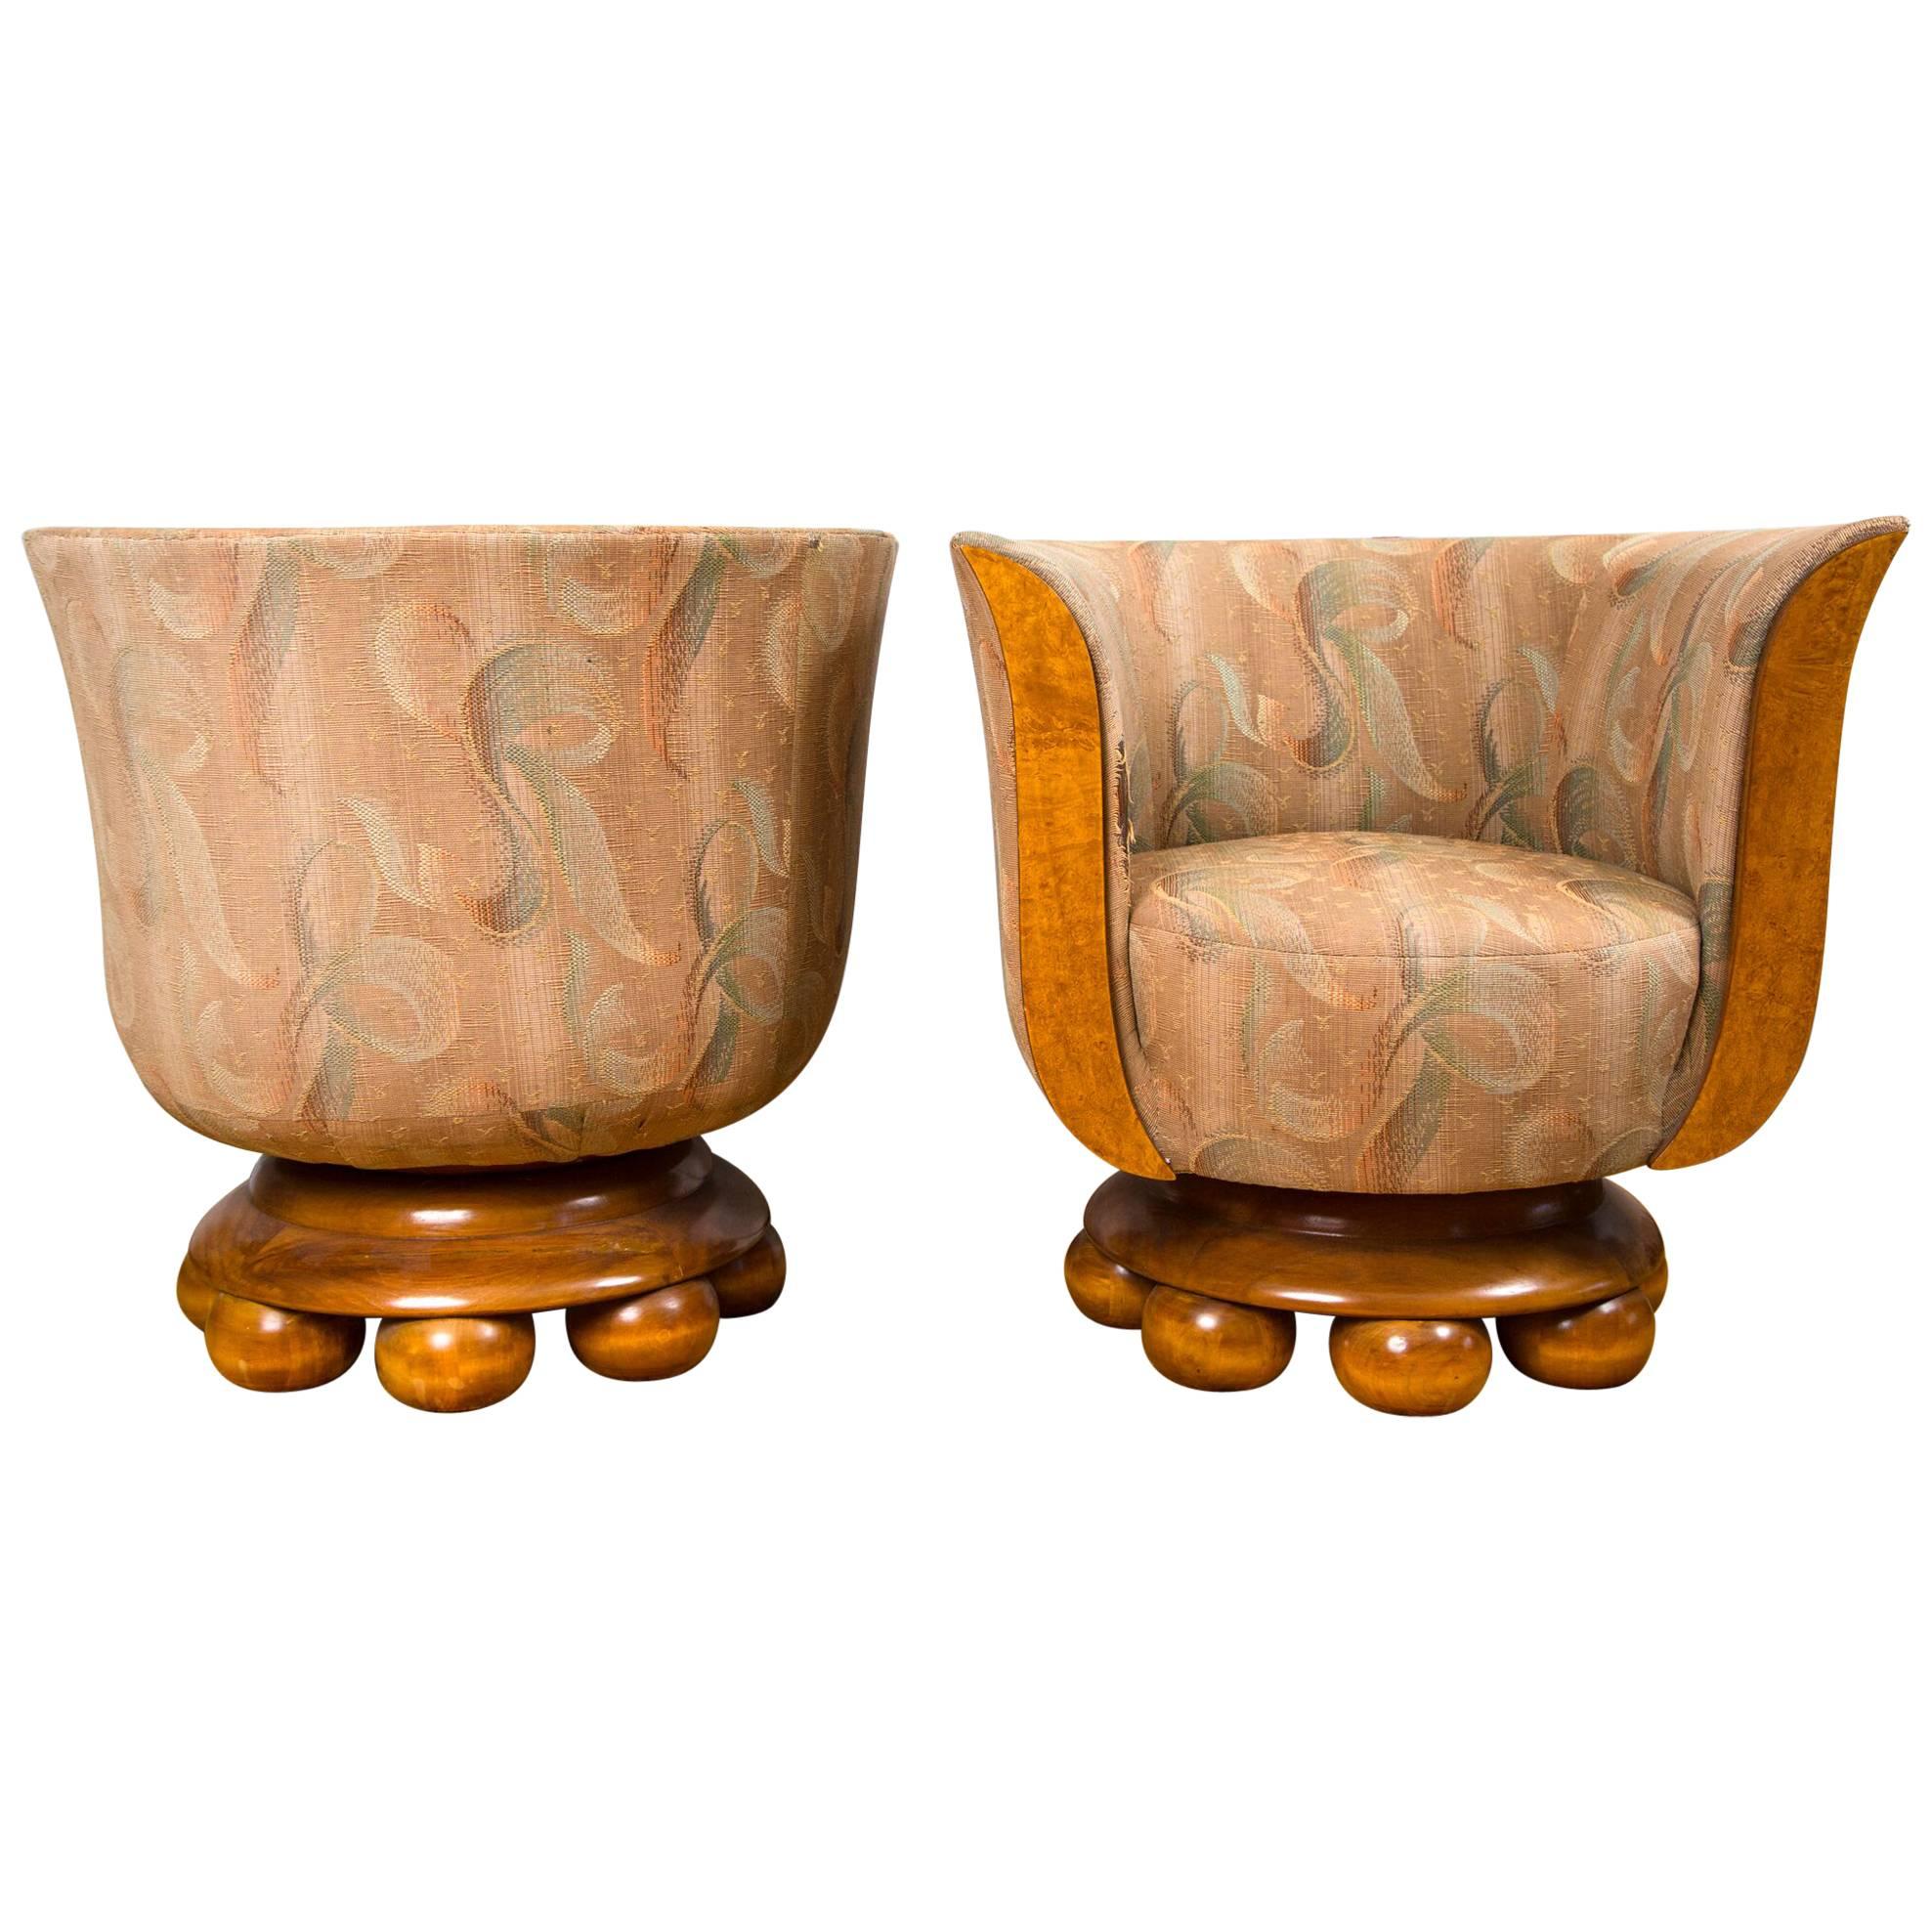 Pair of Burl Wood Art Deco Club Chairs from Belgium